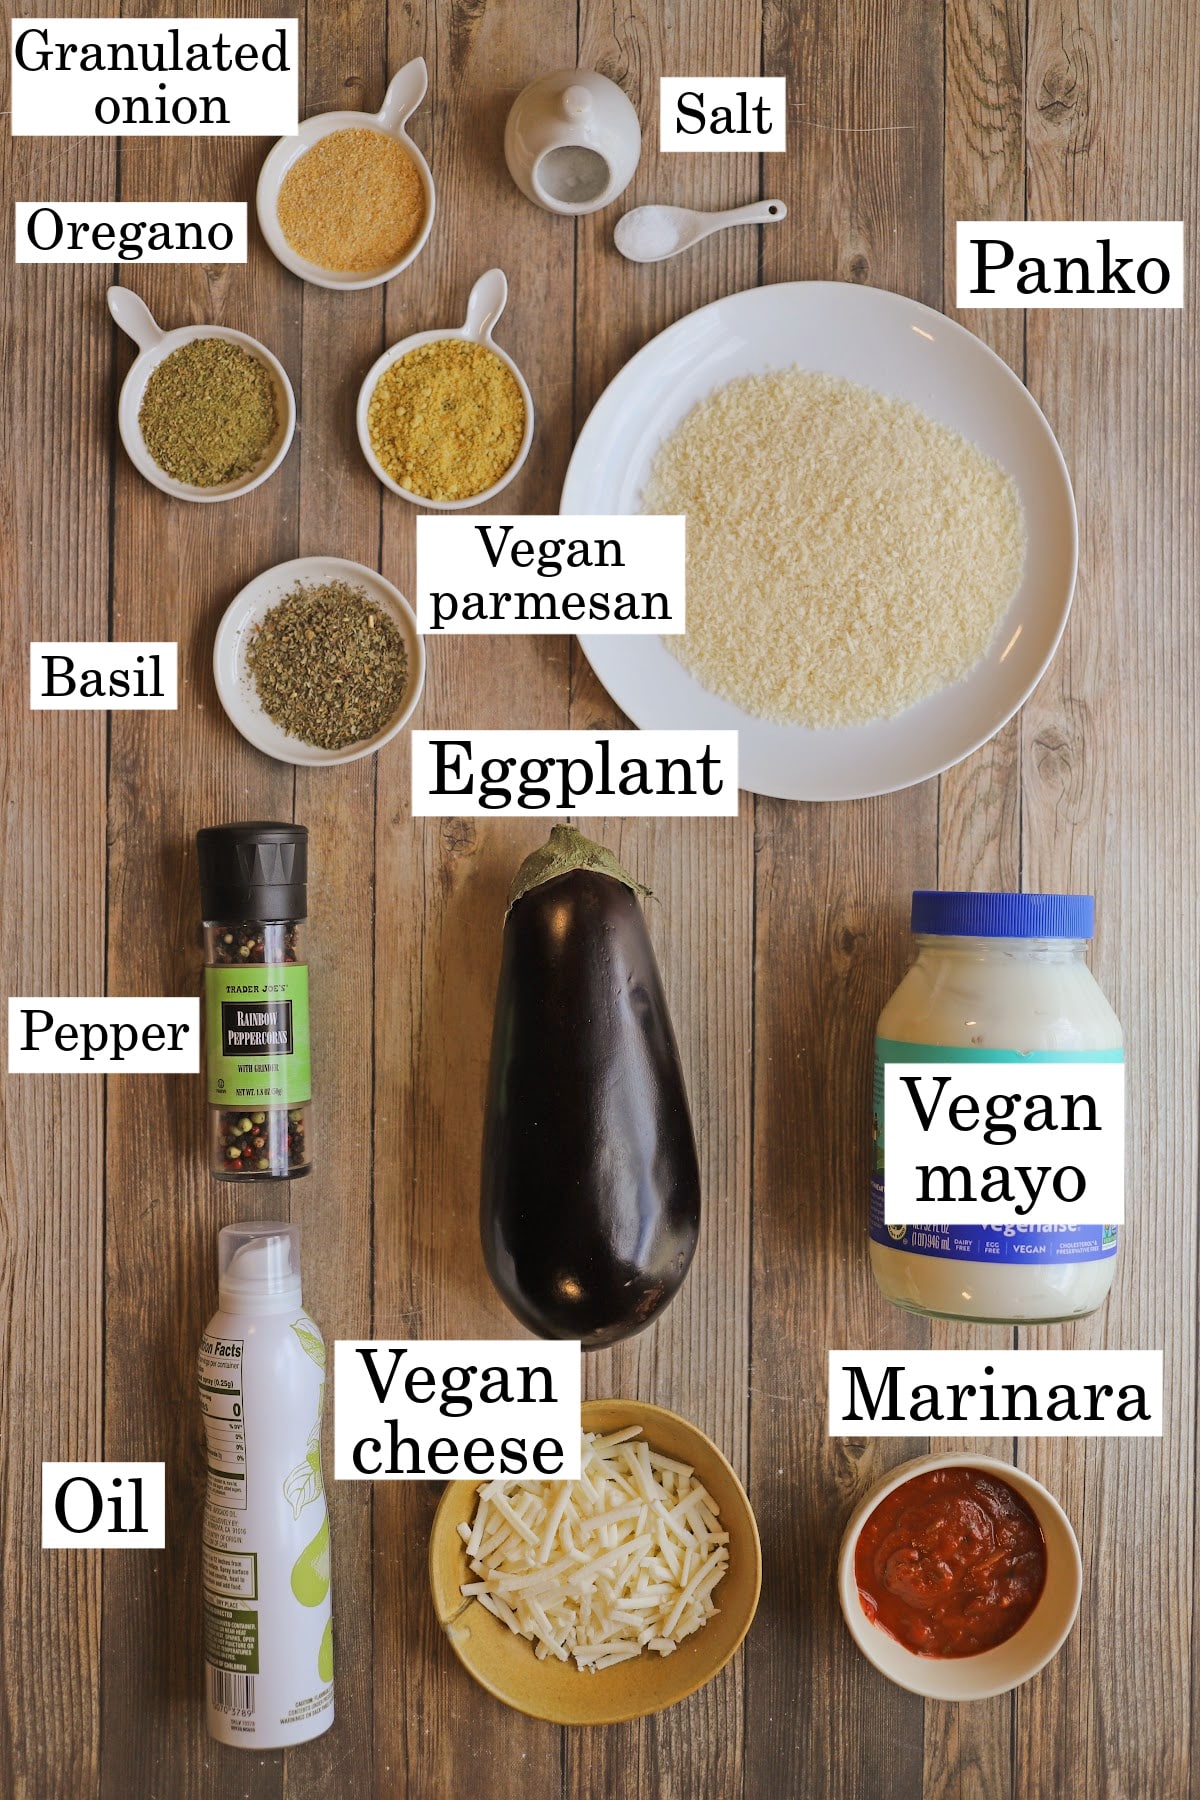 Labeled ingredients for vegan eggplant parmesan.